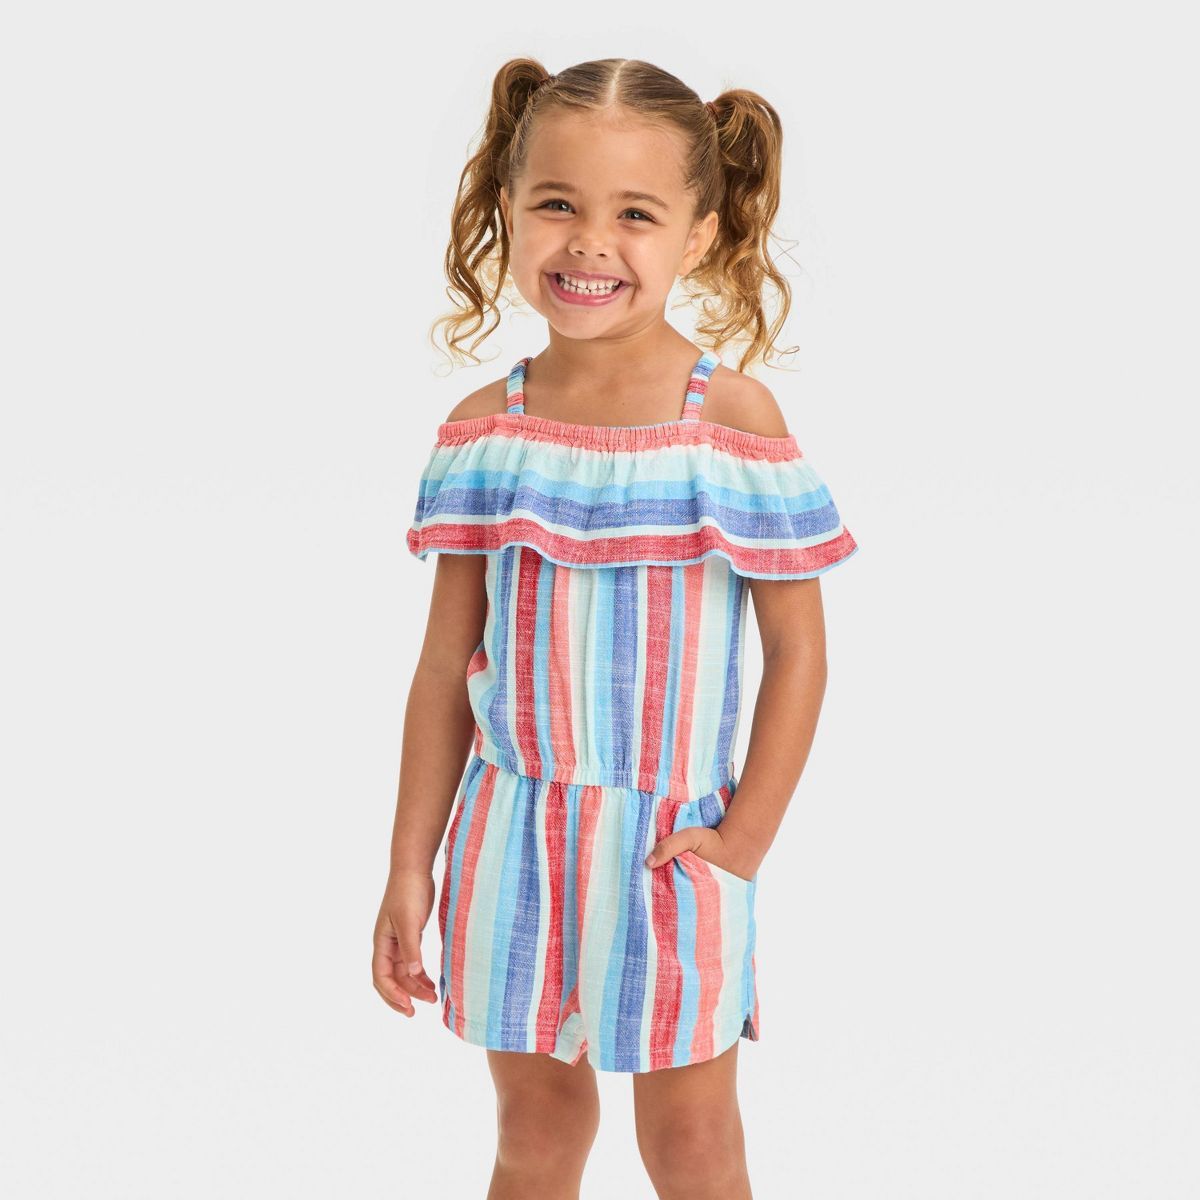 Toddler Girls' Striped Romper - Cat & Jack™ Red/Blue/White 5T | Target